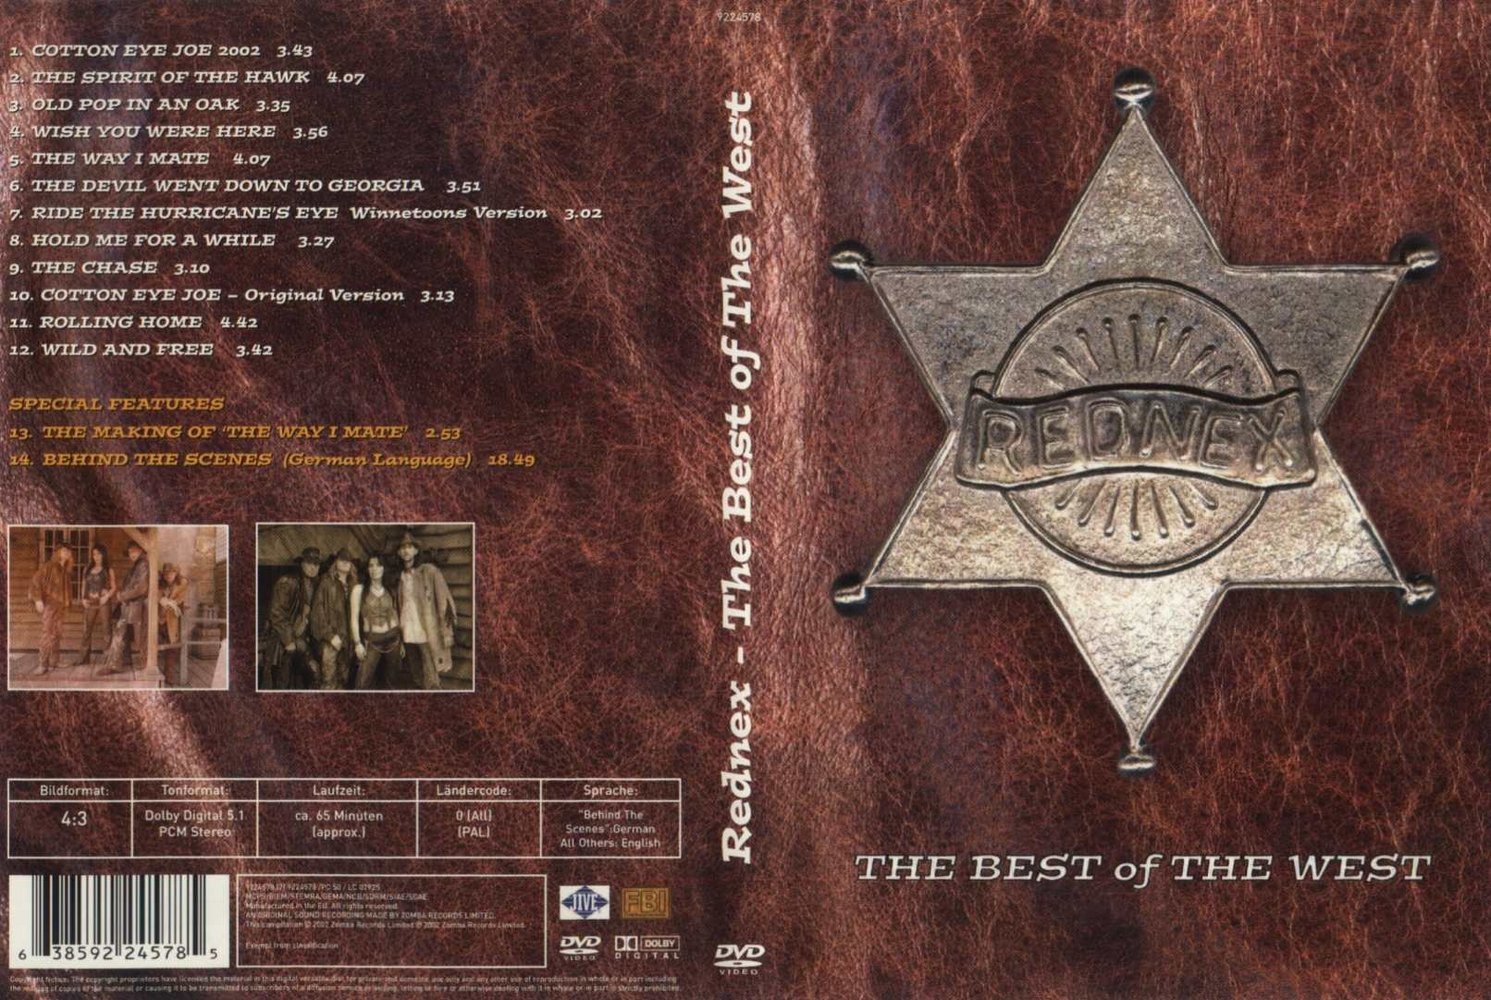 Cotton eye joe перевод на русский. Rednex - Cotton Eye Joe обложка. Rednex CD. The best of the West Rednex. Rednex обложки альбомов.